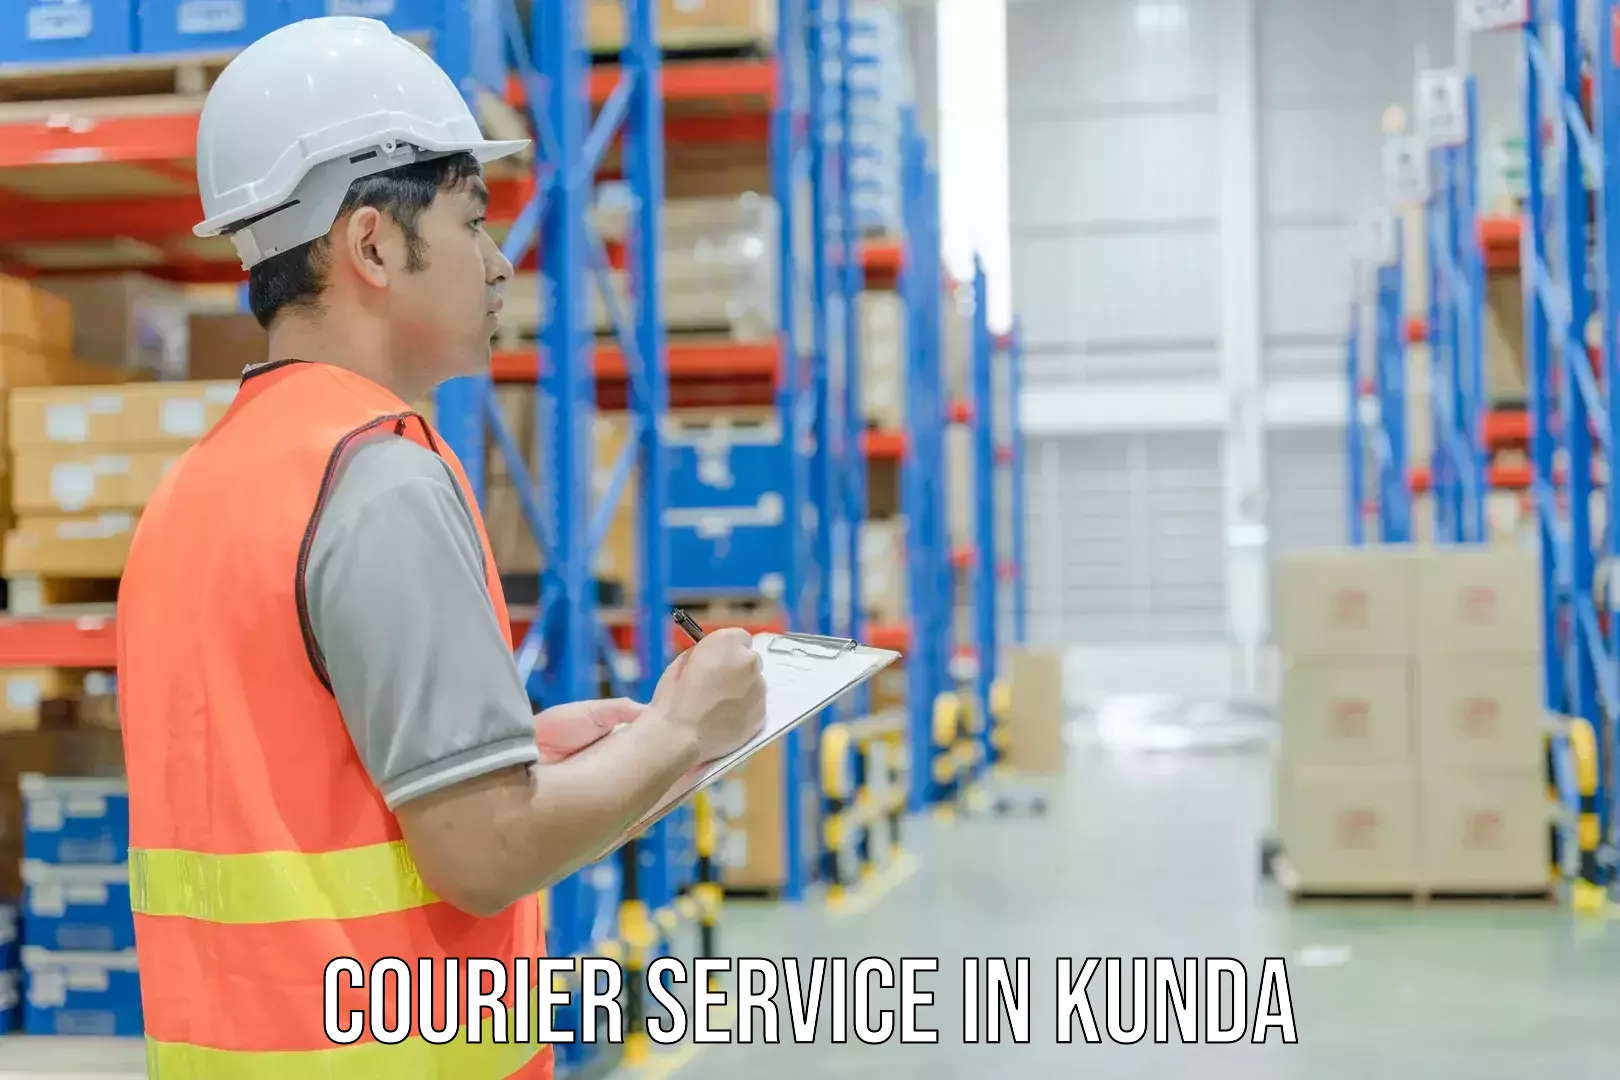 Flexible delivery schedules in Kunda